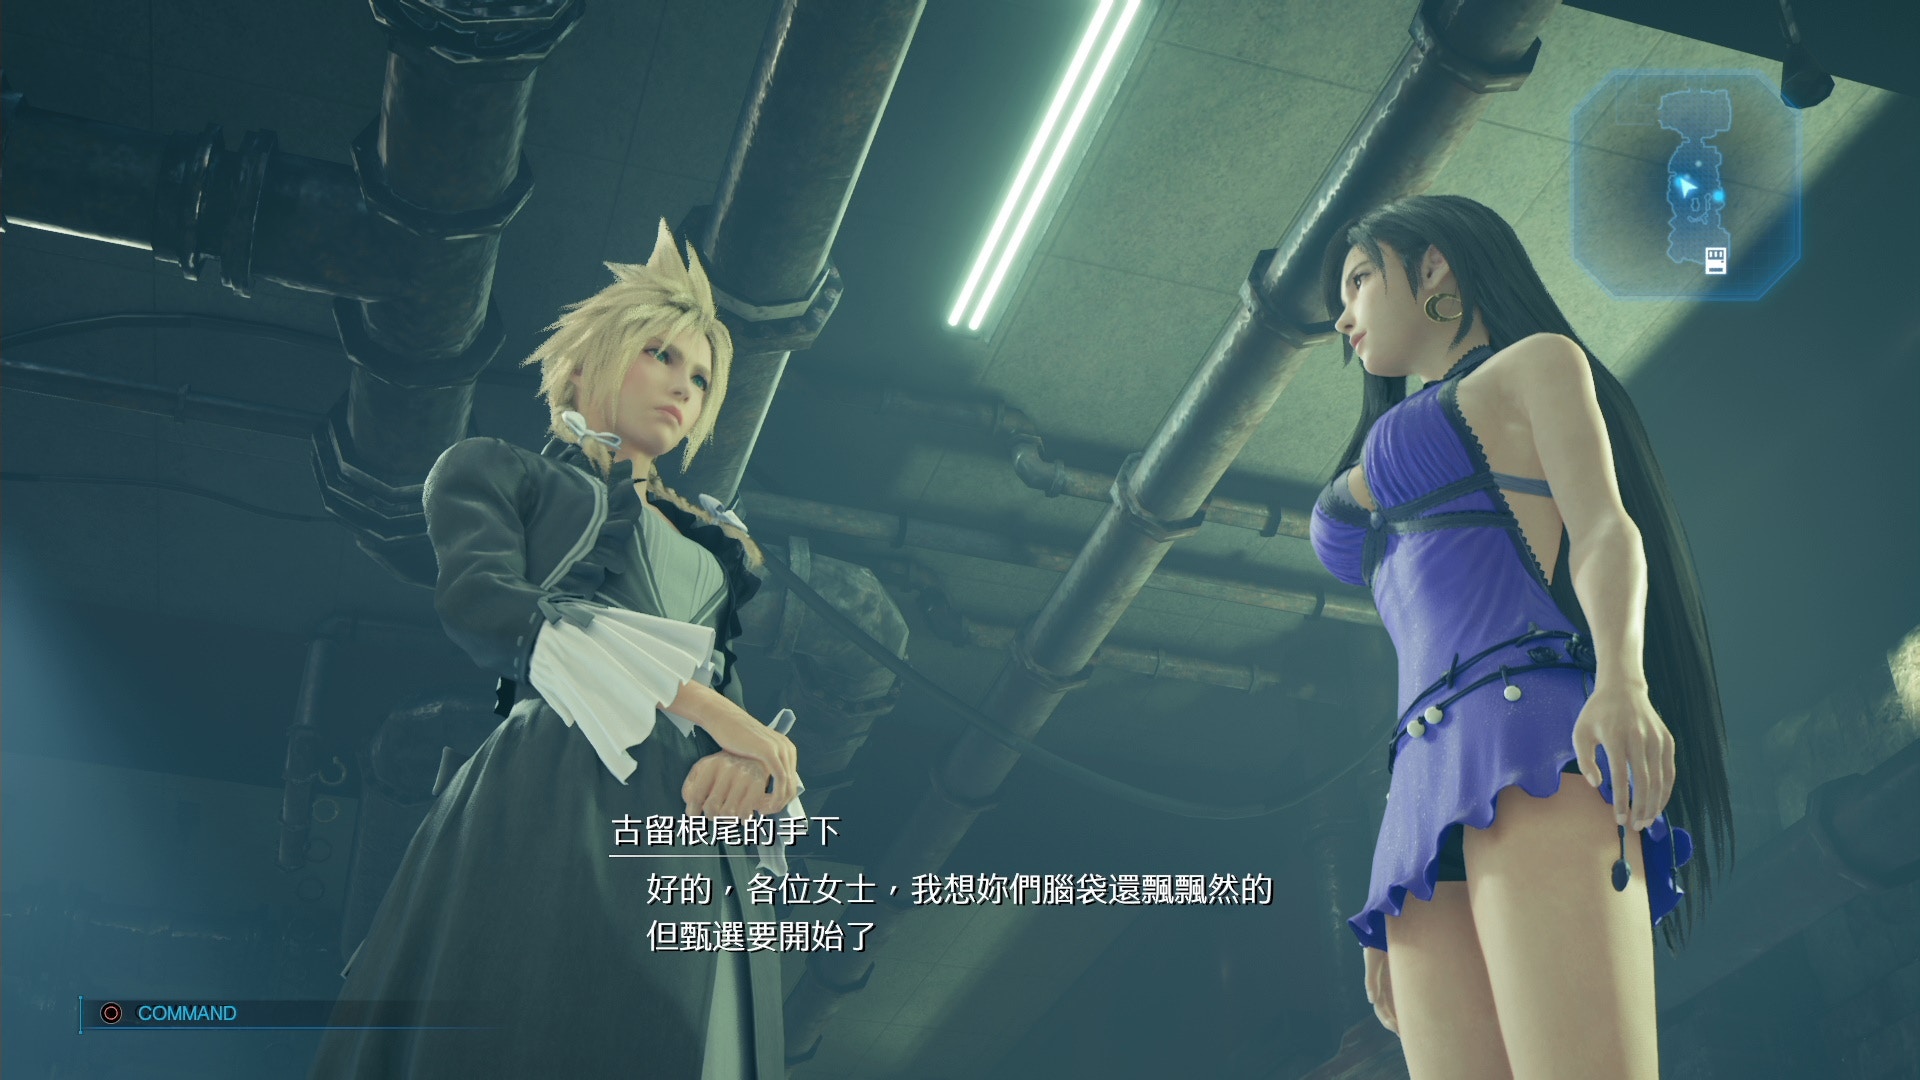 Ff7r Final Fantasy Vii Remake 蒂法tifa禮服三大分歧及靚圖集